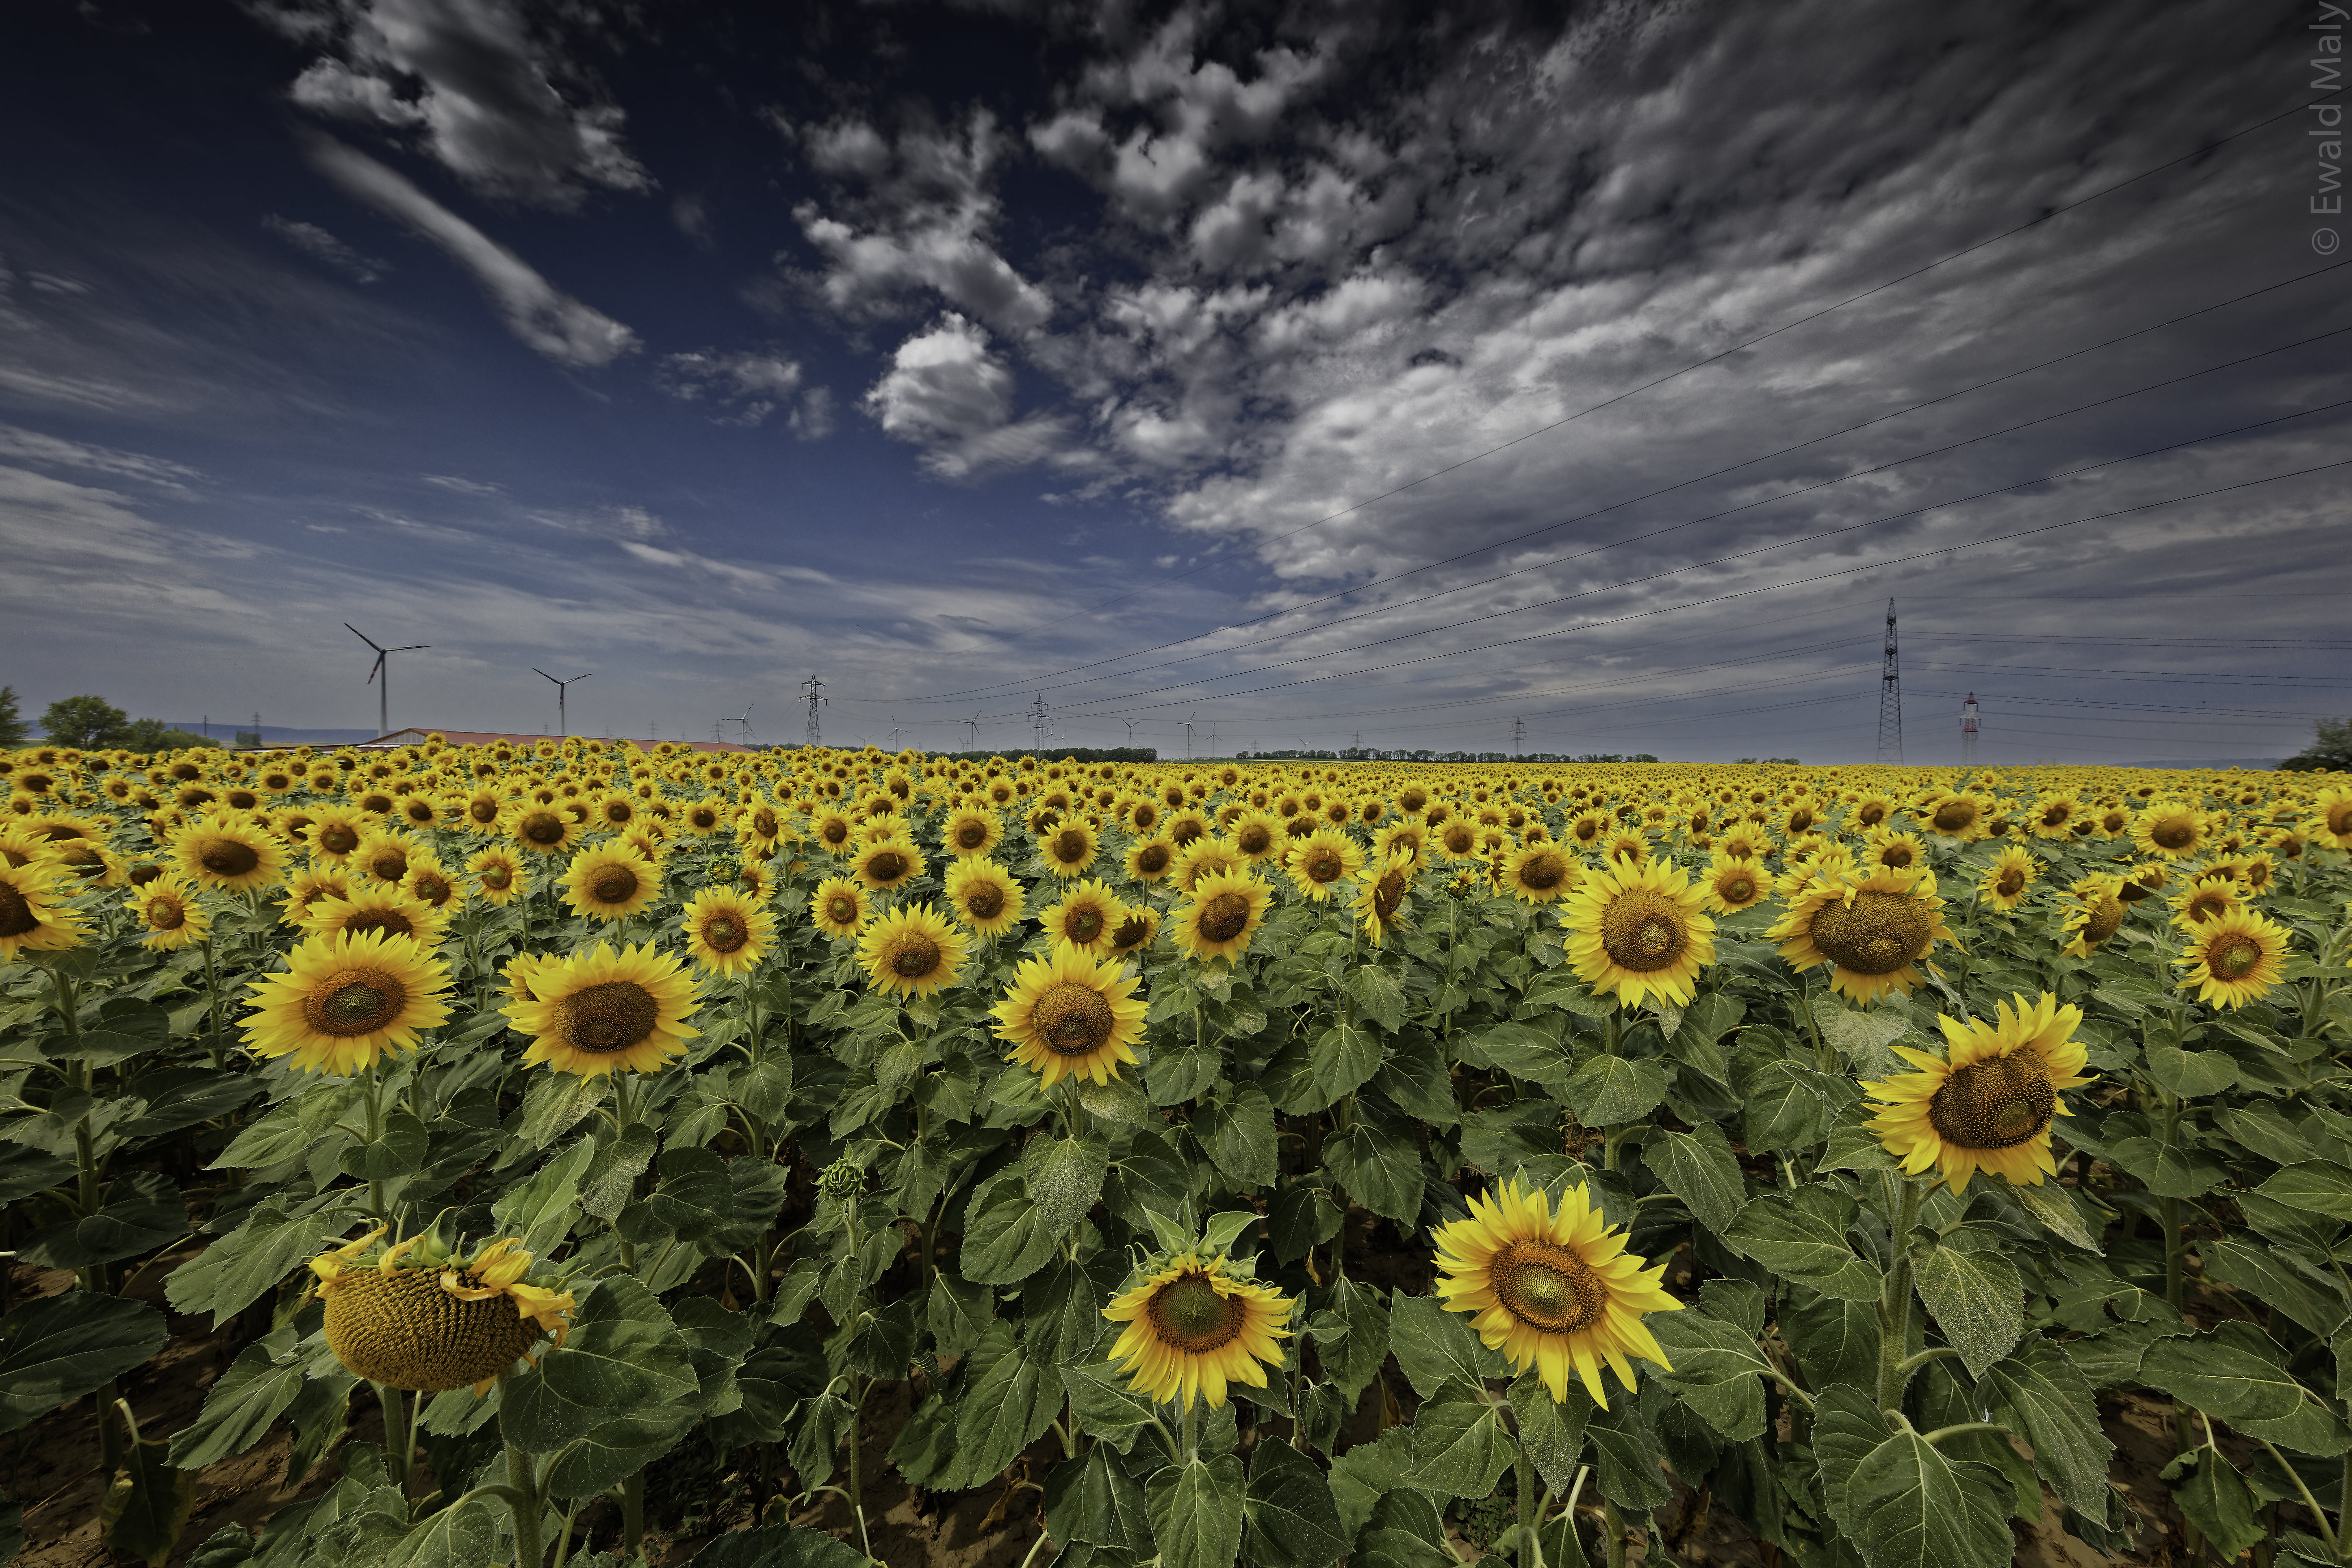 sunflower field under gray sky